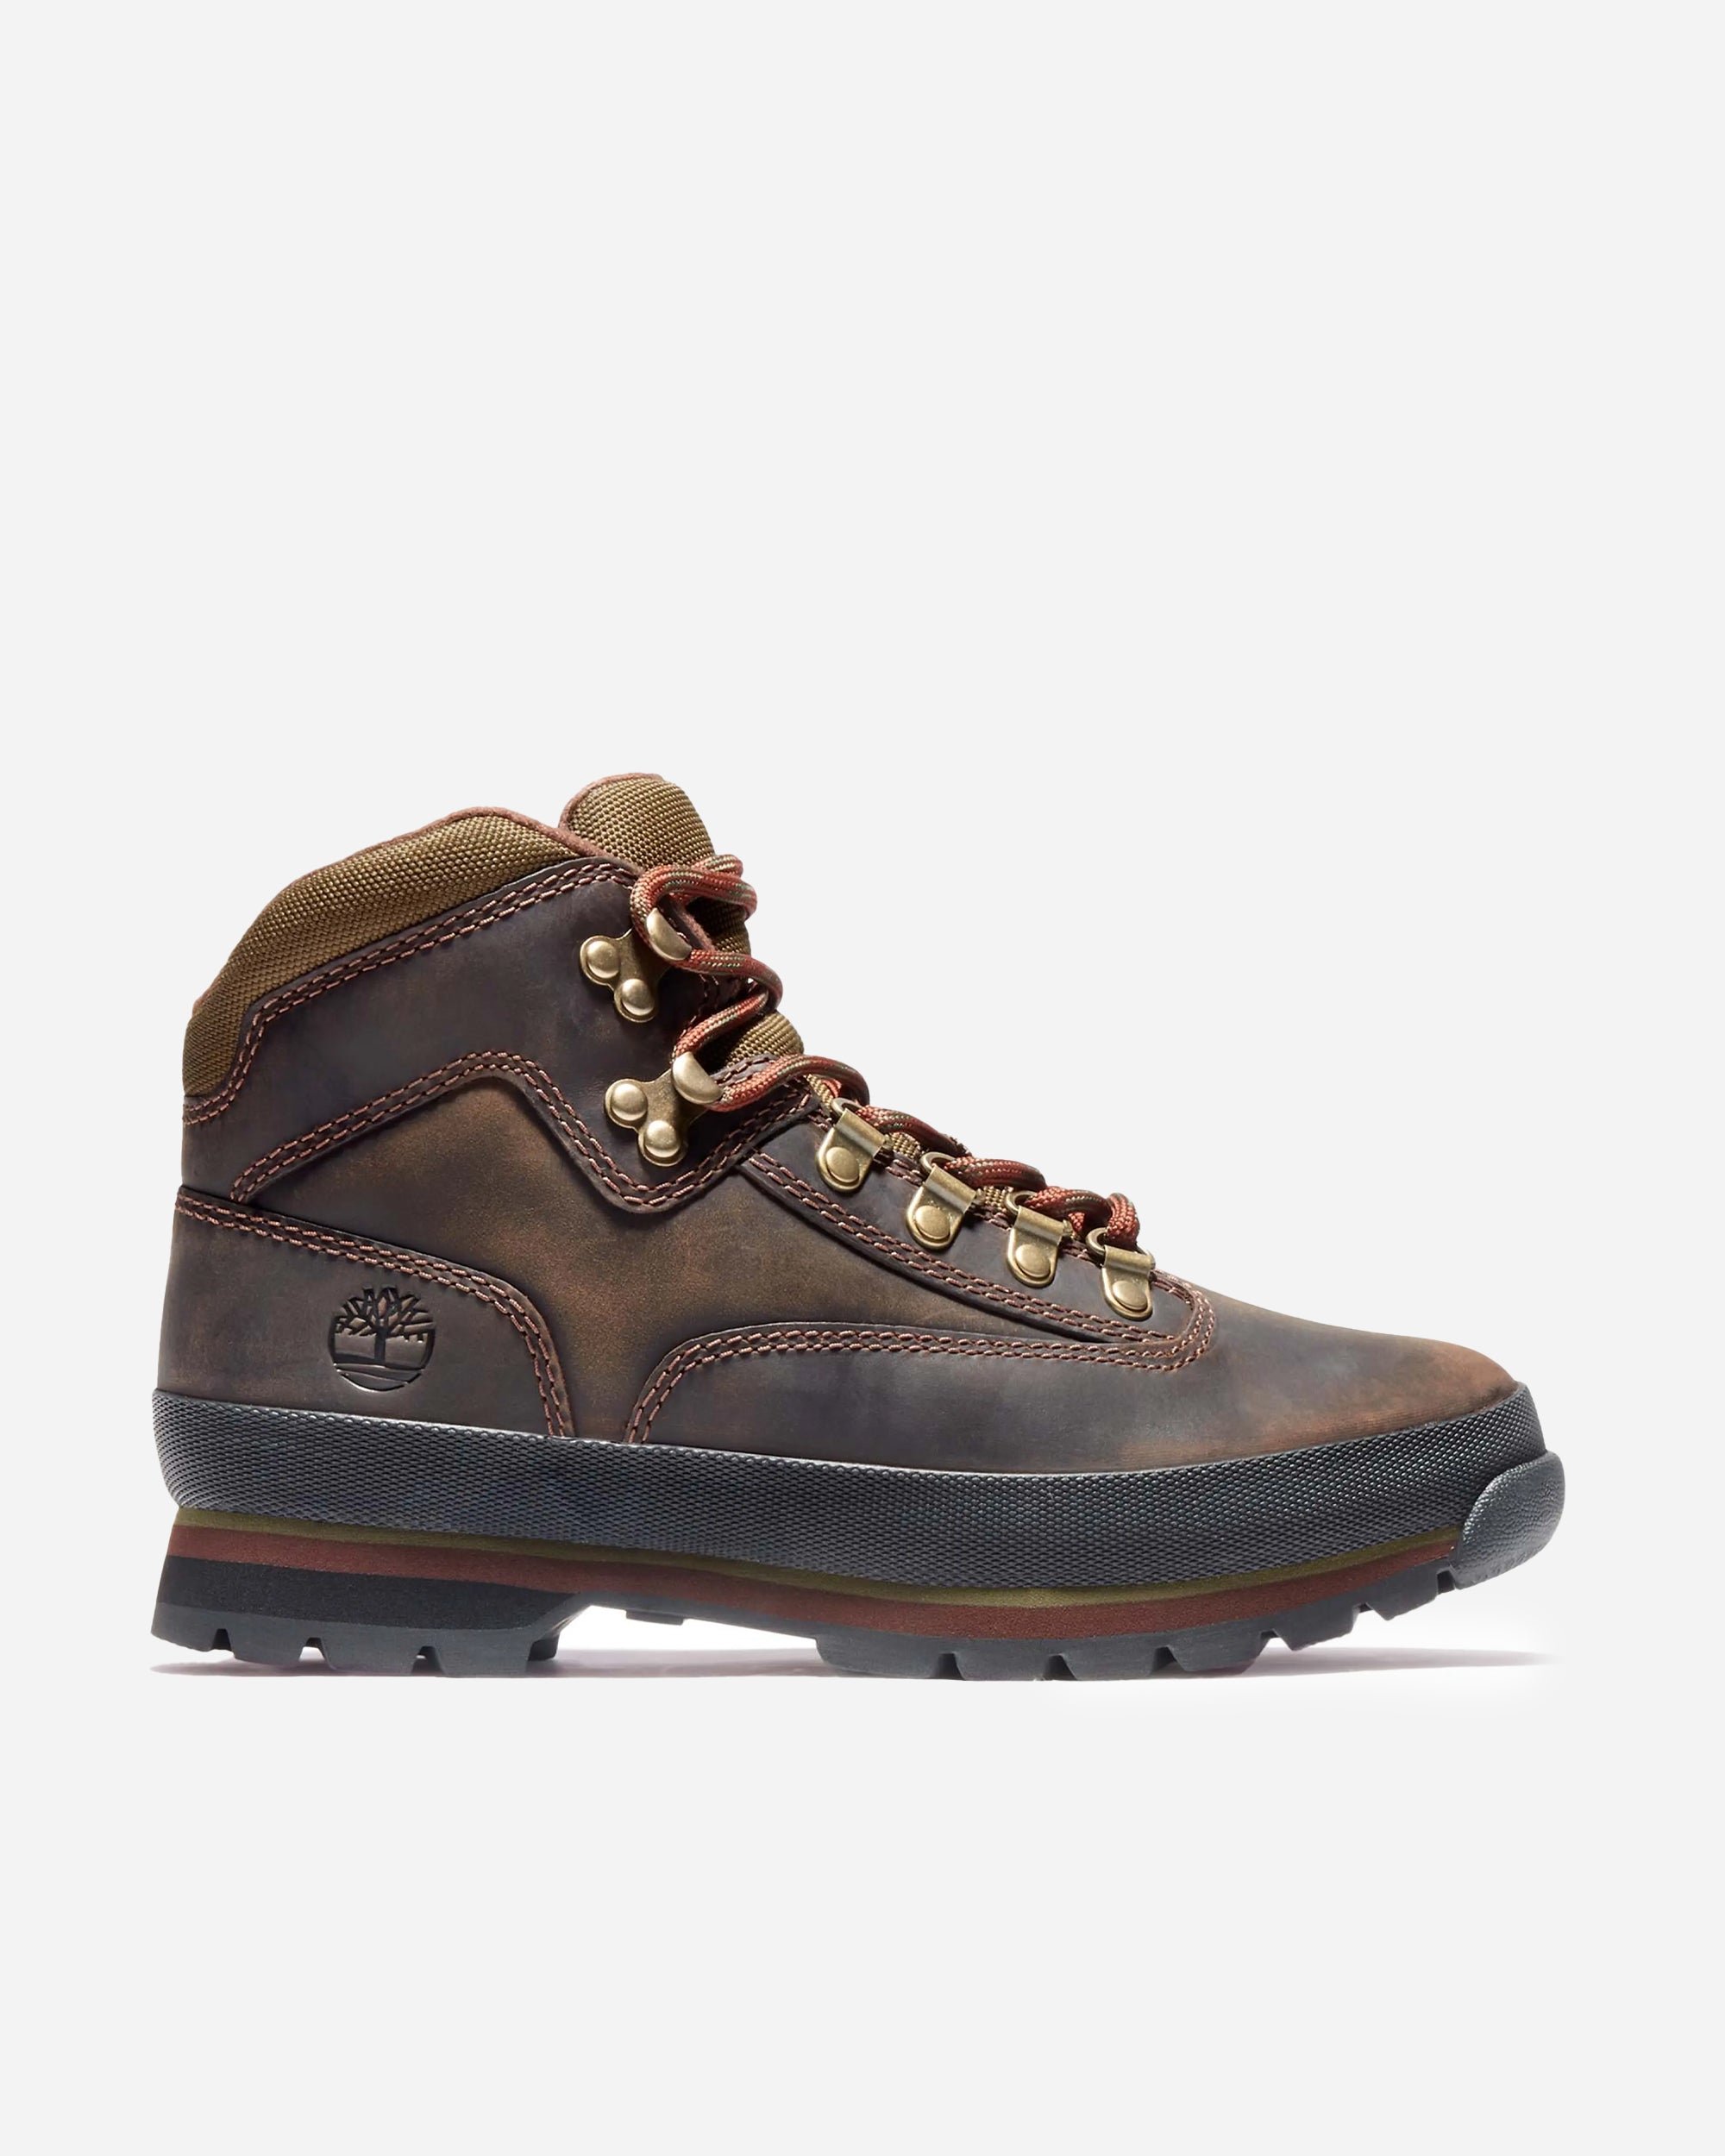 Euro Hiker Boots